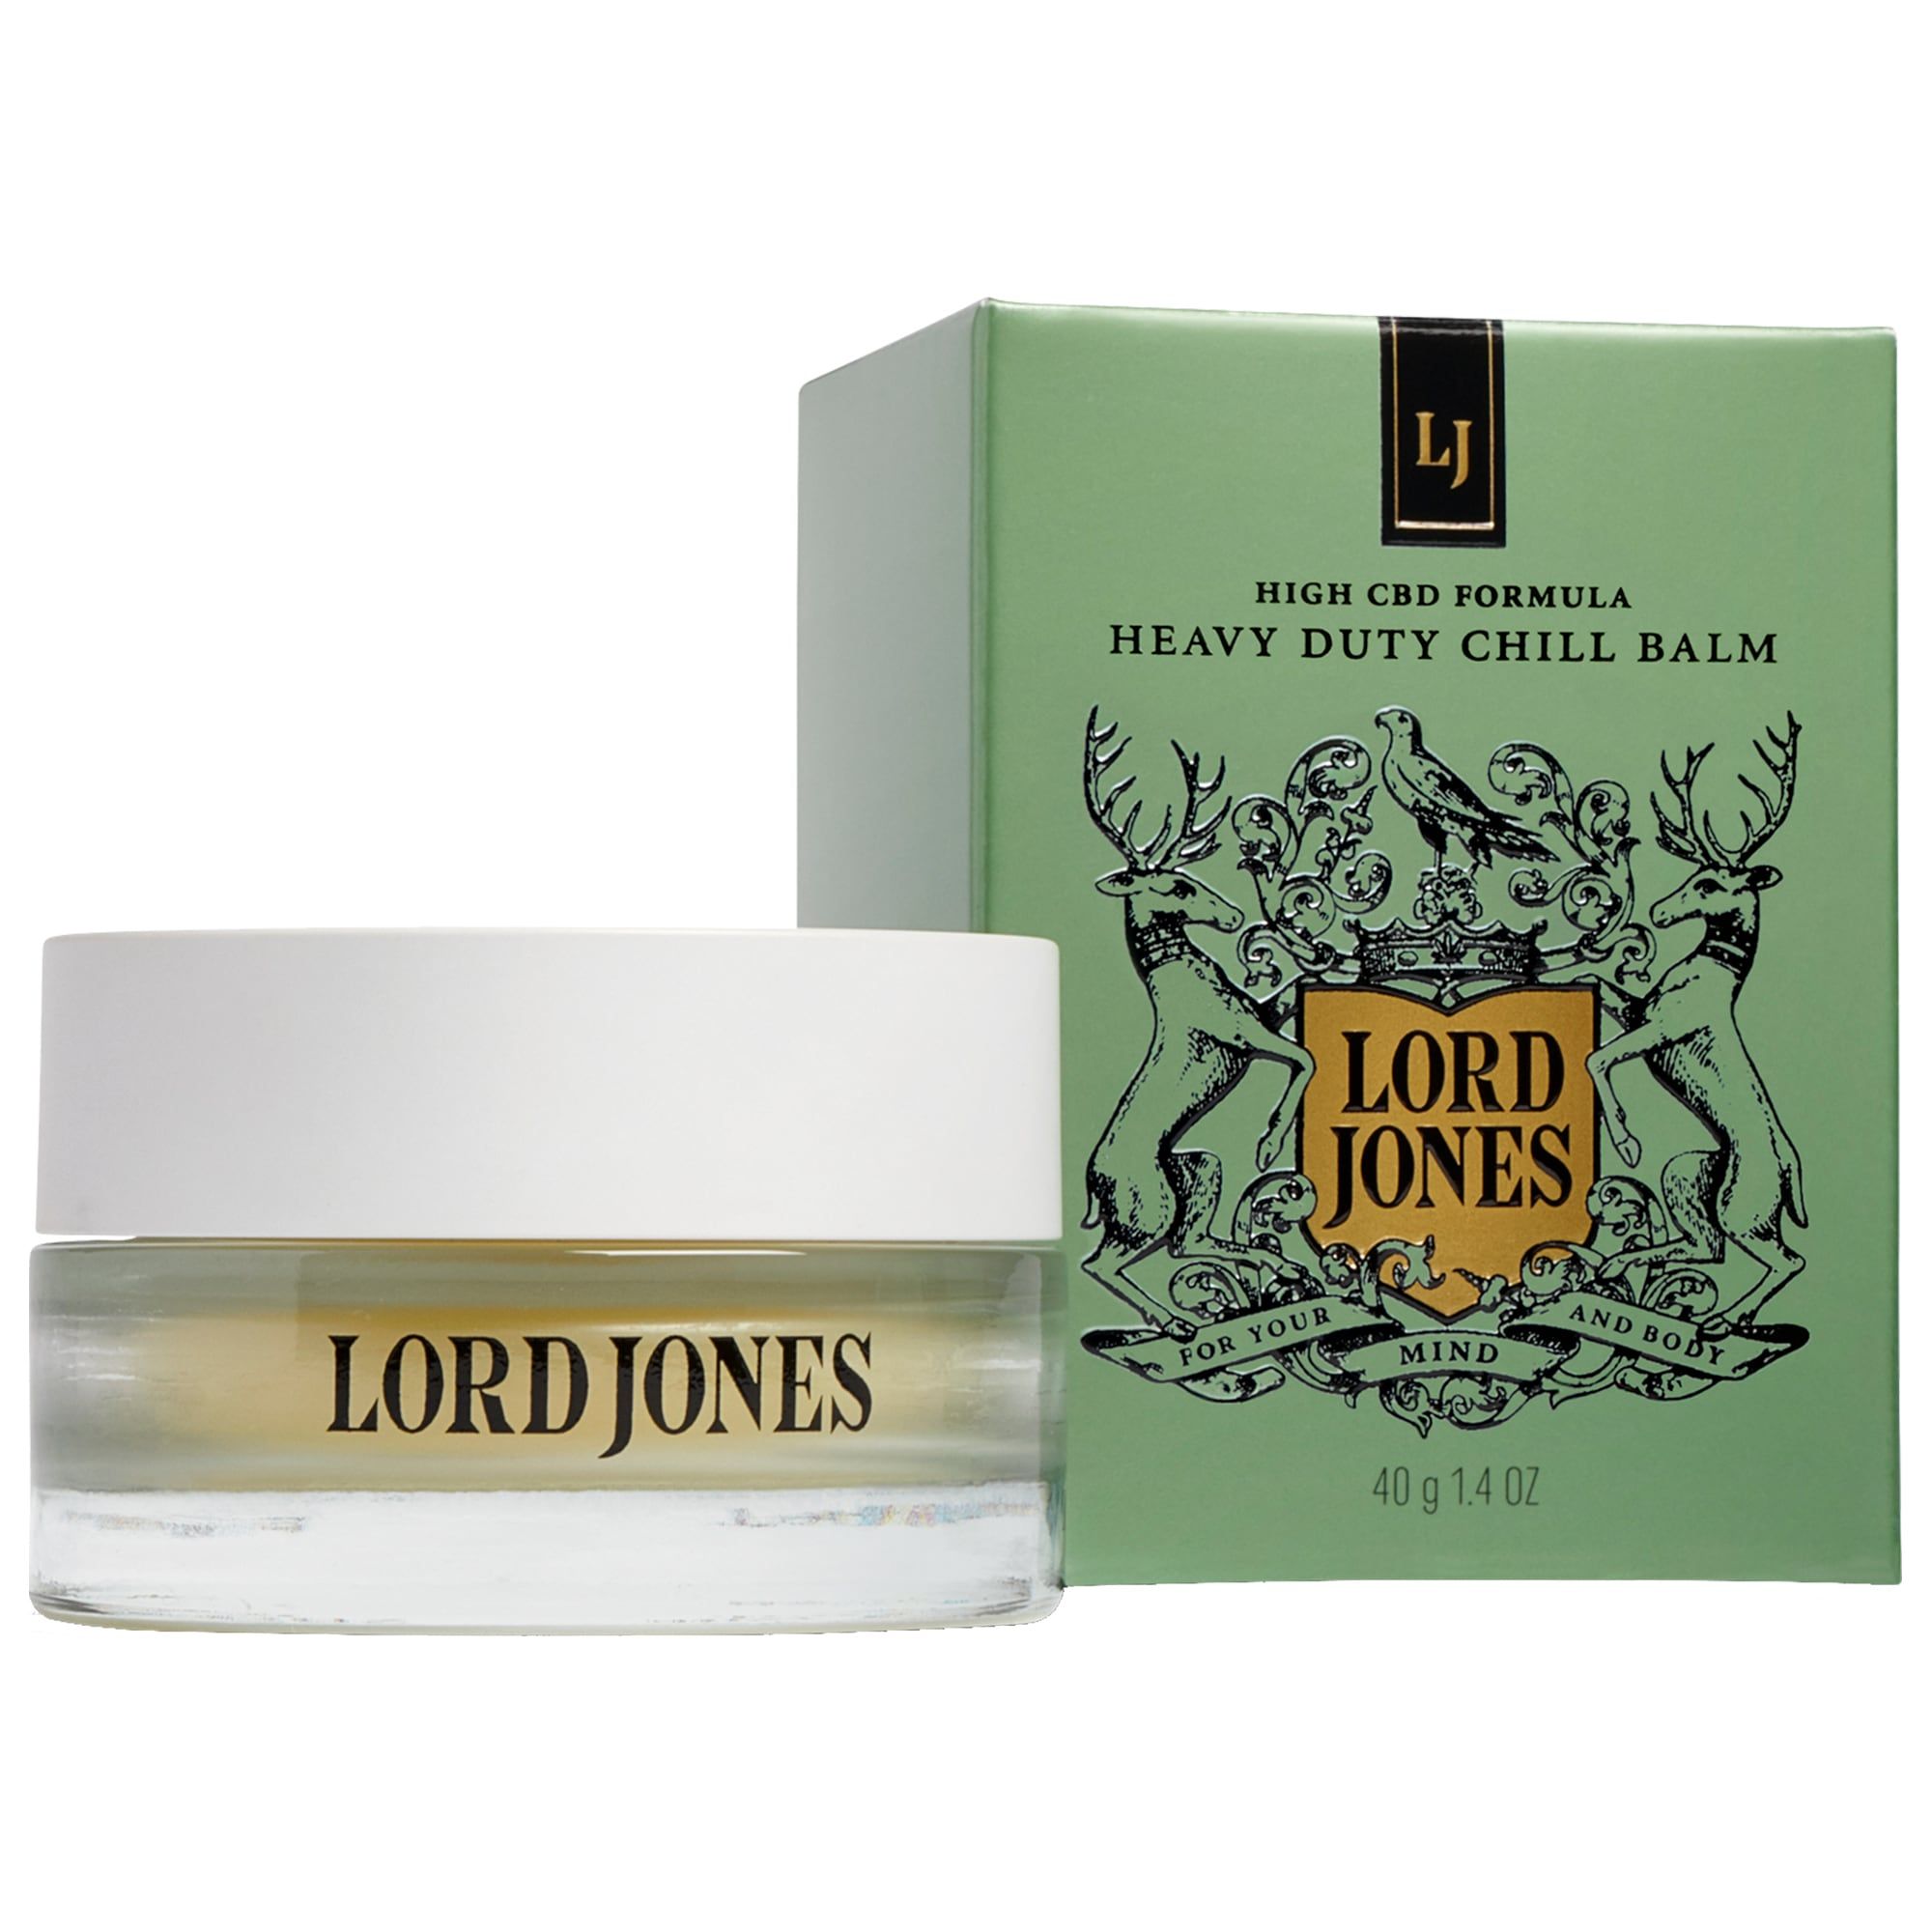 Lord Jones High CBD Formula Chill Balm 